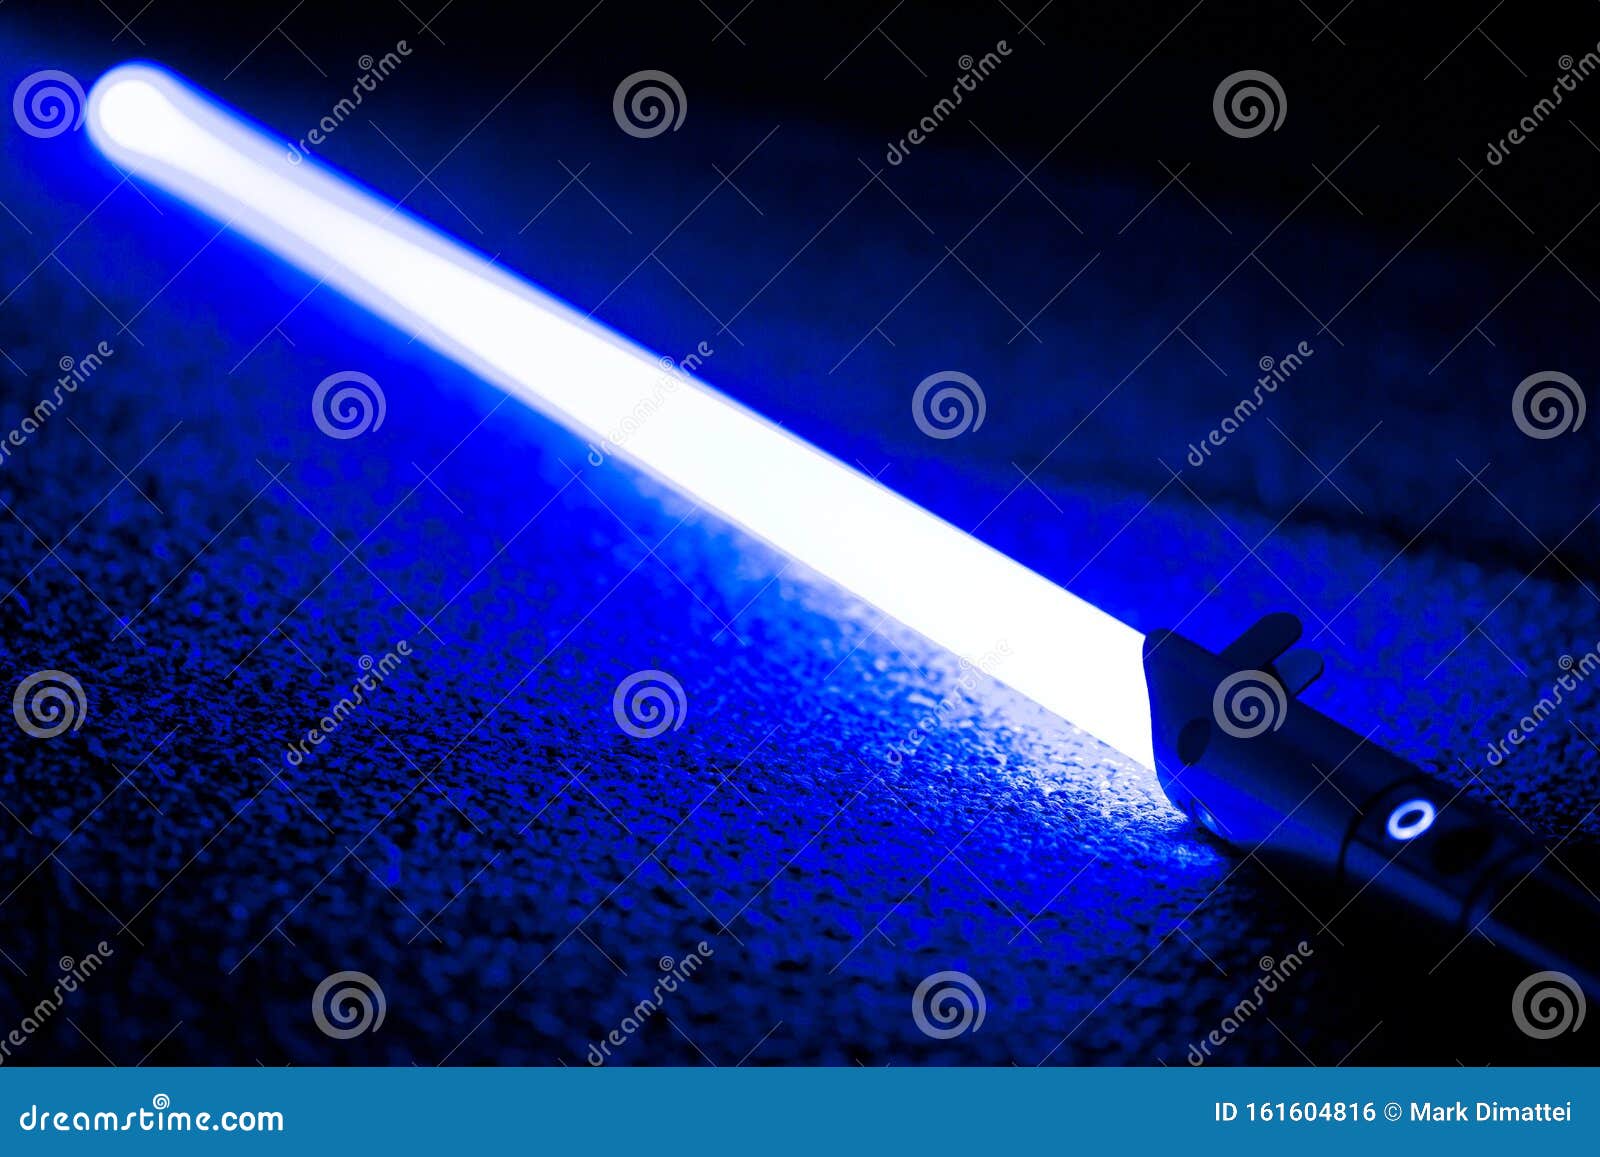 blue light sword saber laying on carpet floor